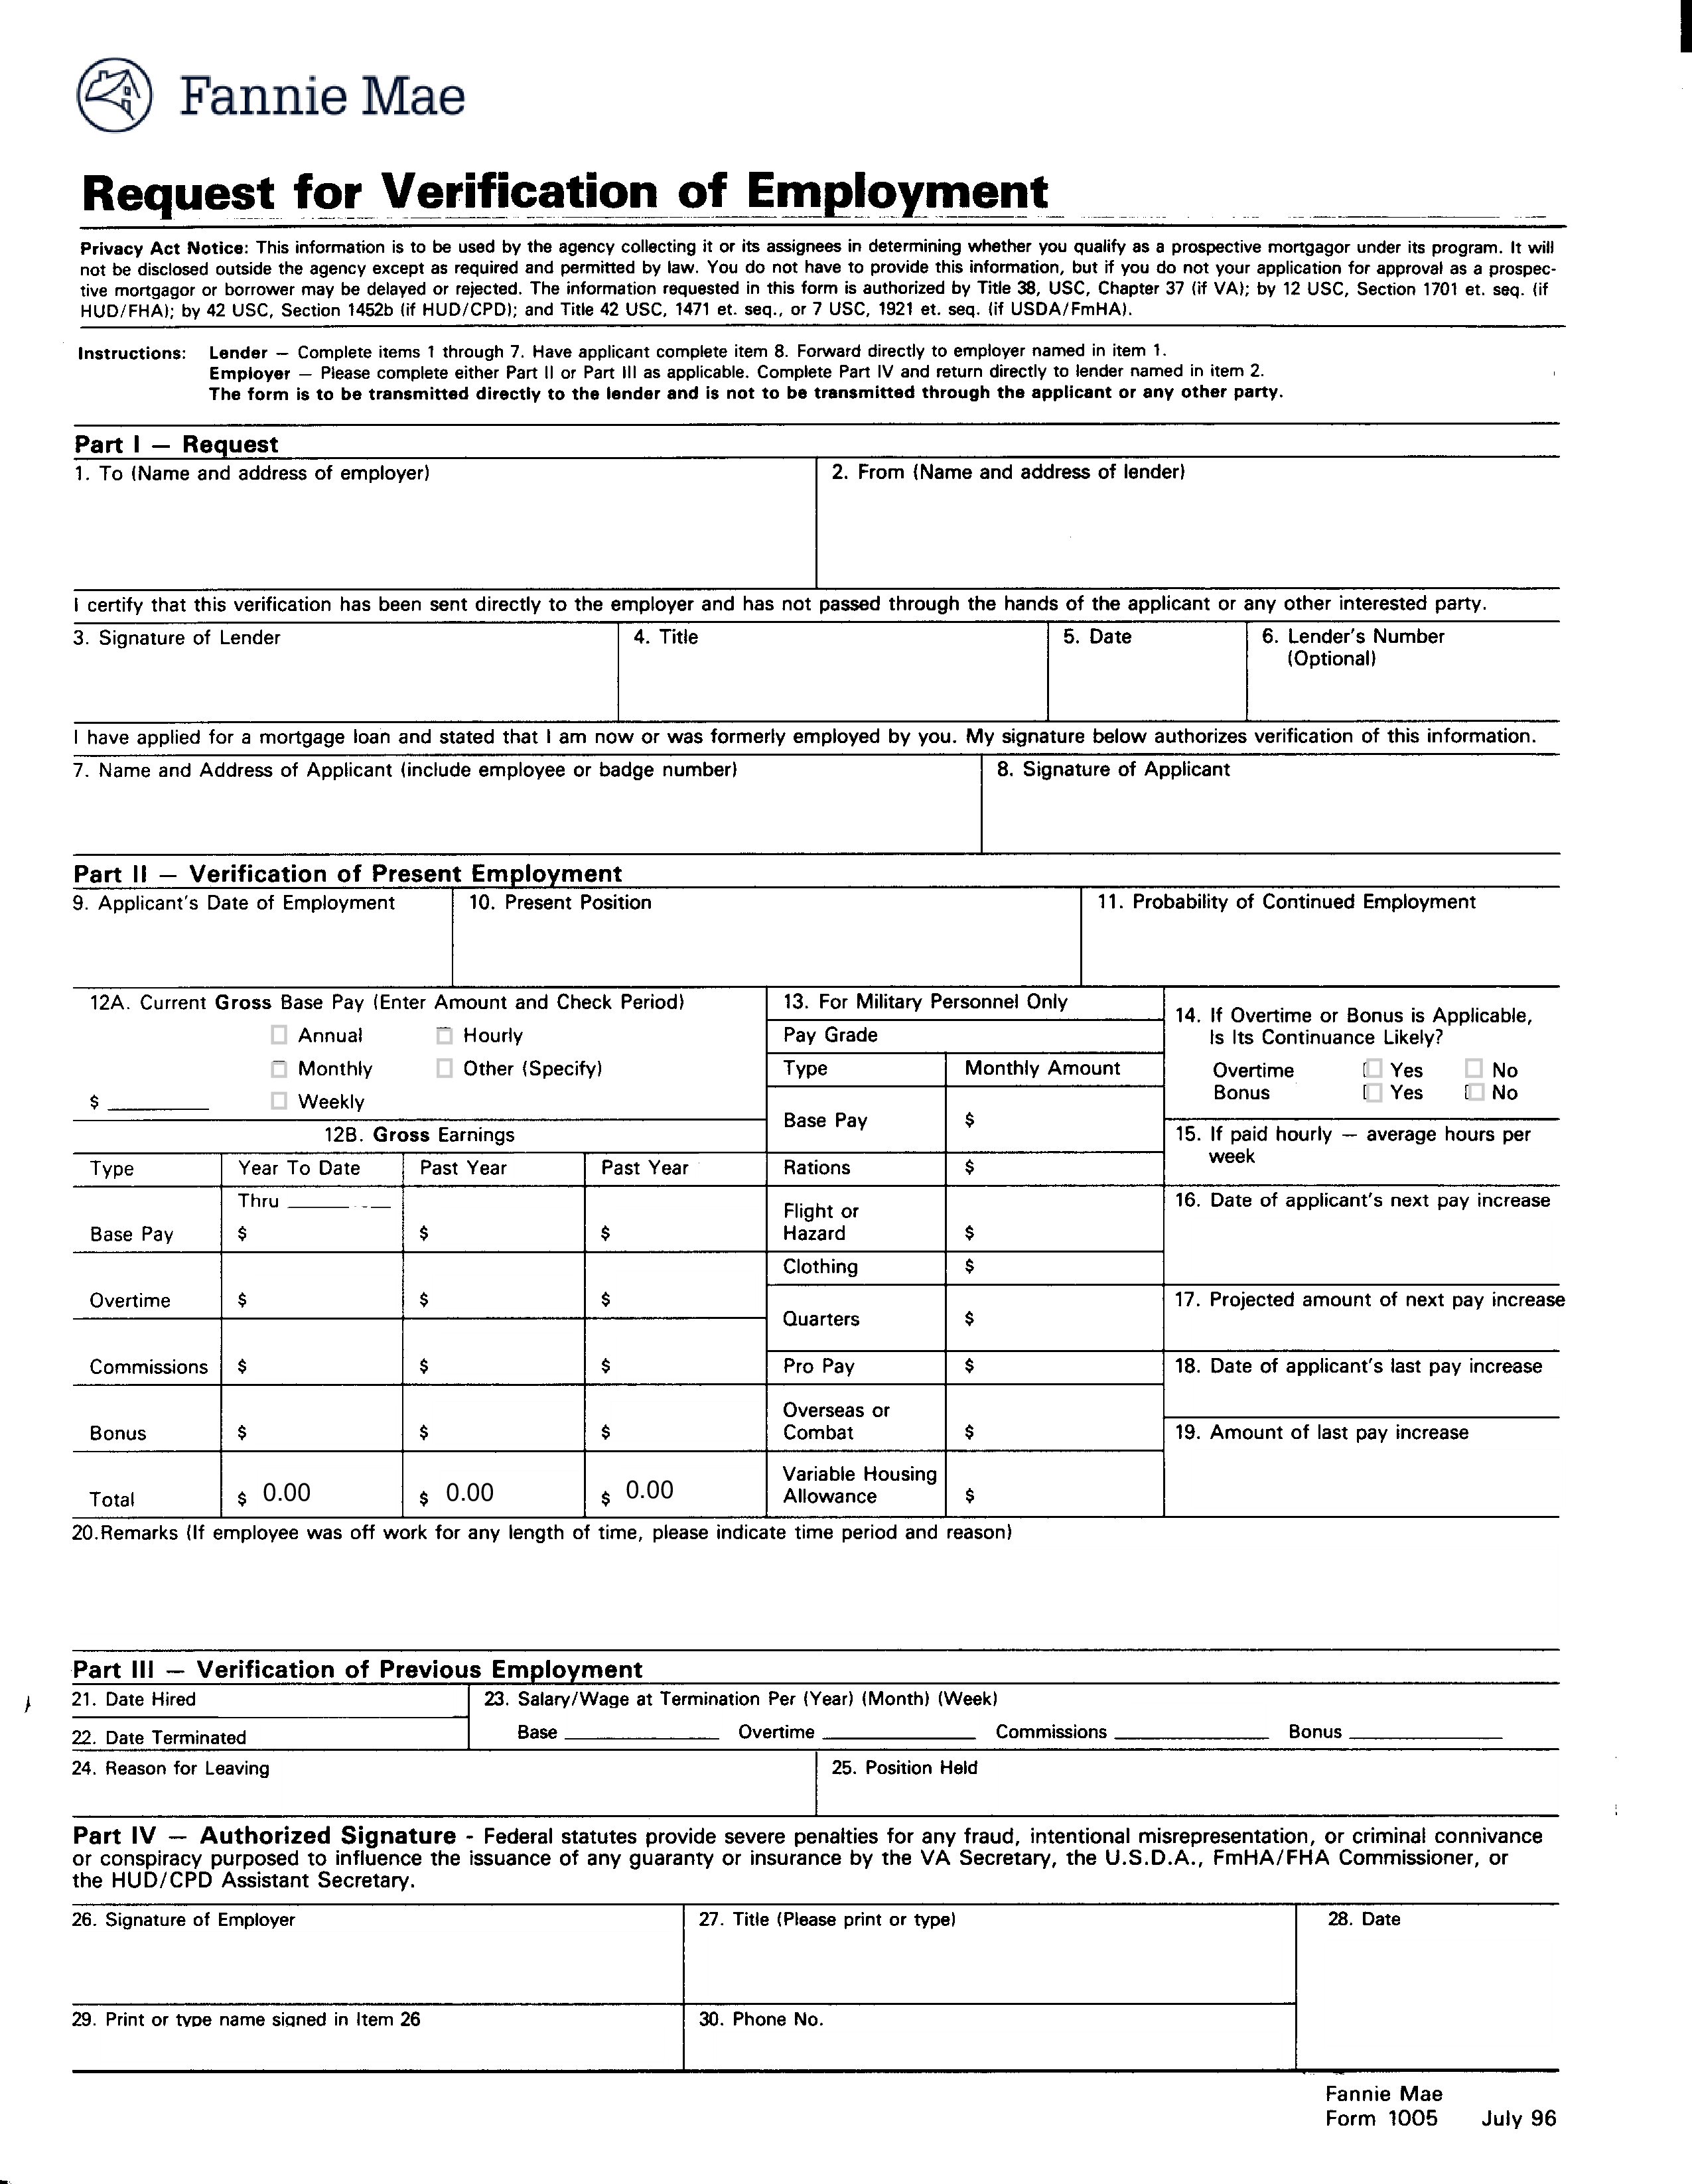 Employment Verification Request Form template main image